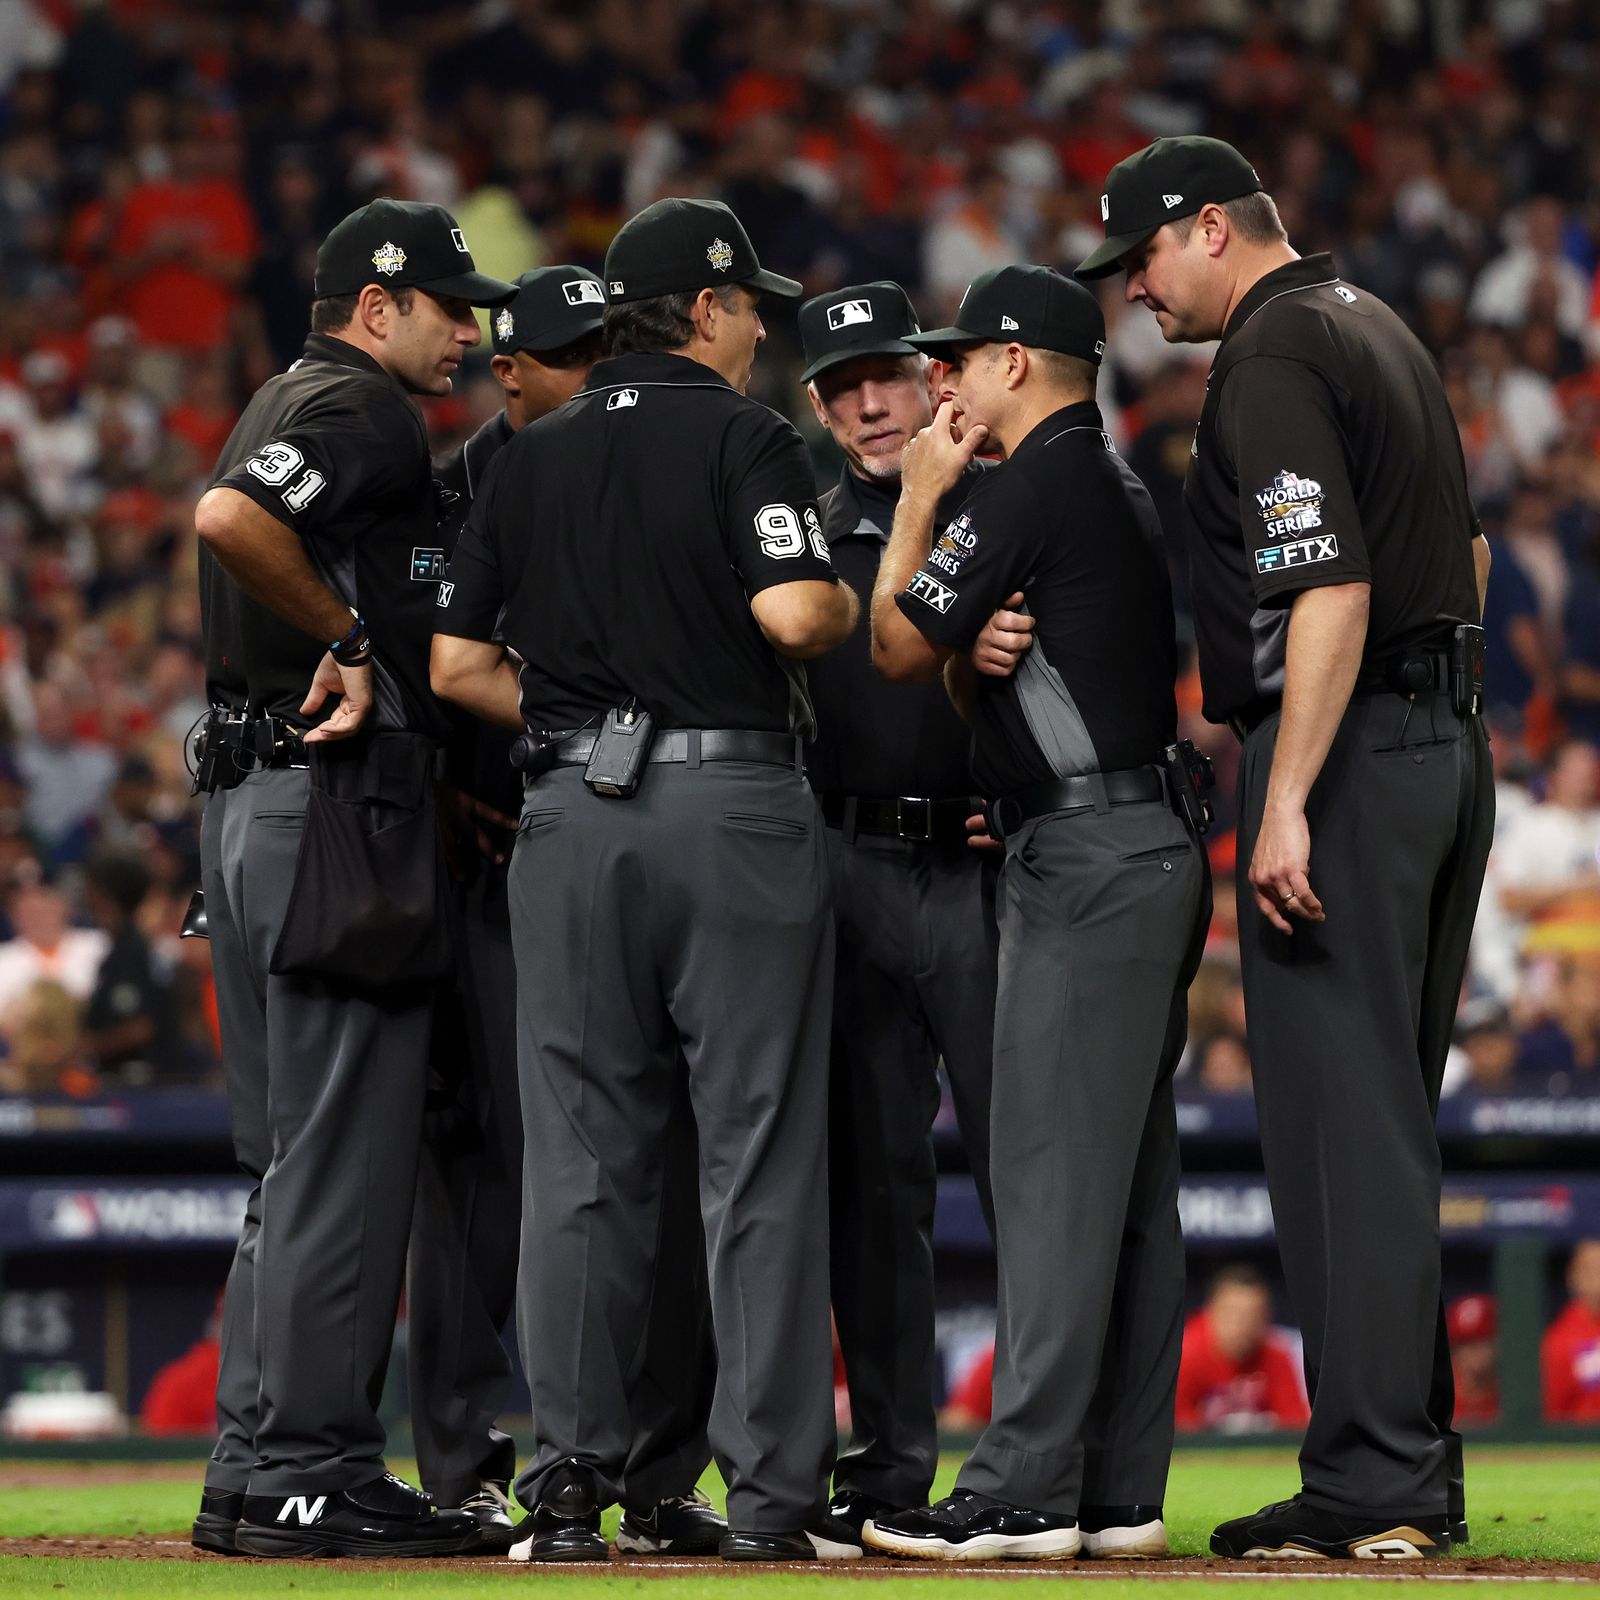 10 Major League Baseball umpires retire in historic exodus